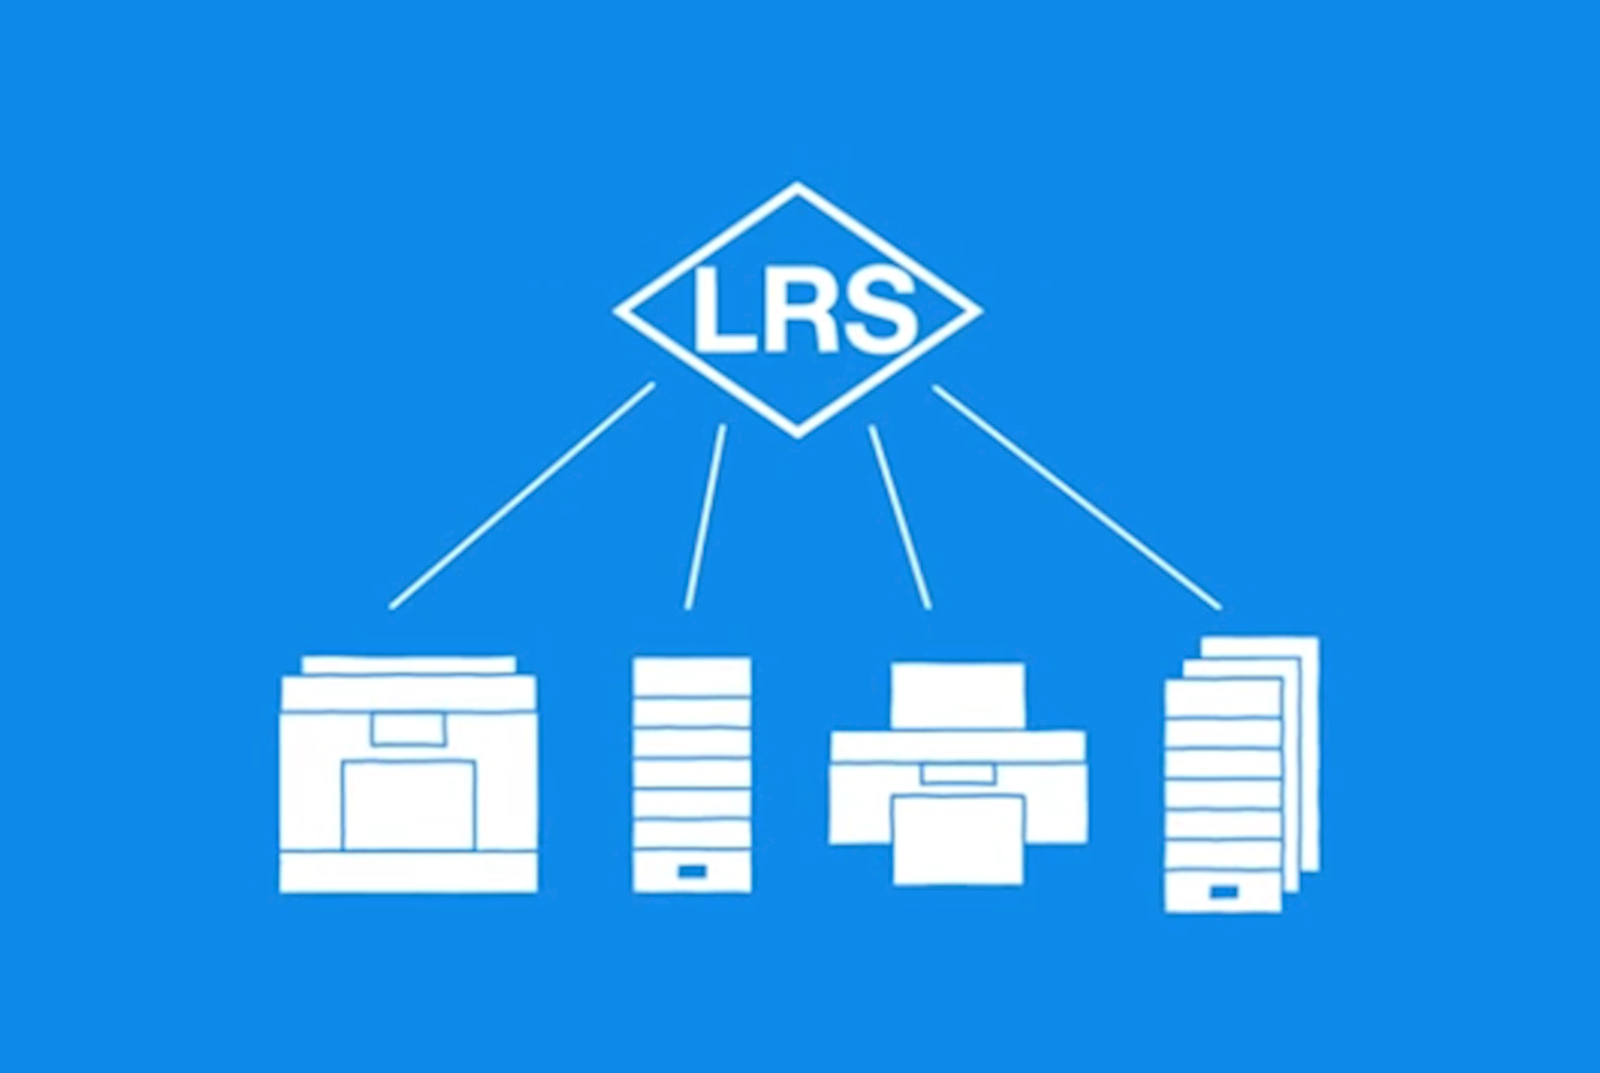 LRS centralization image